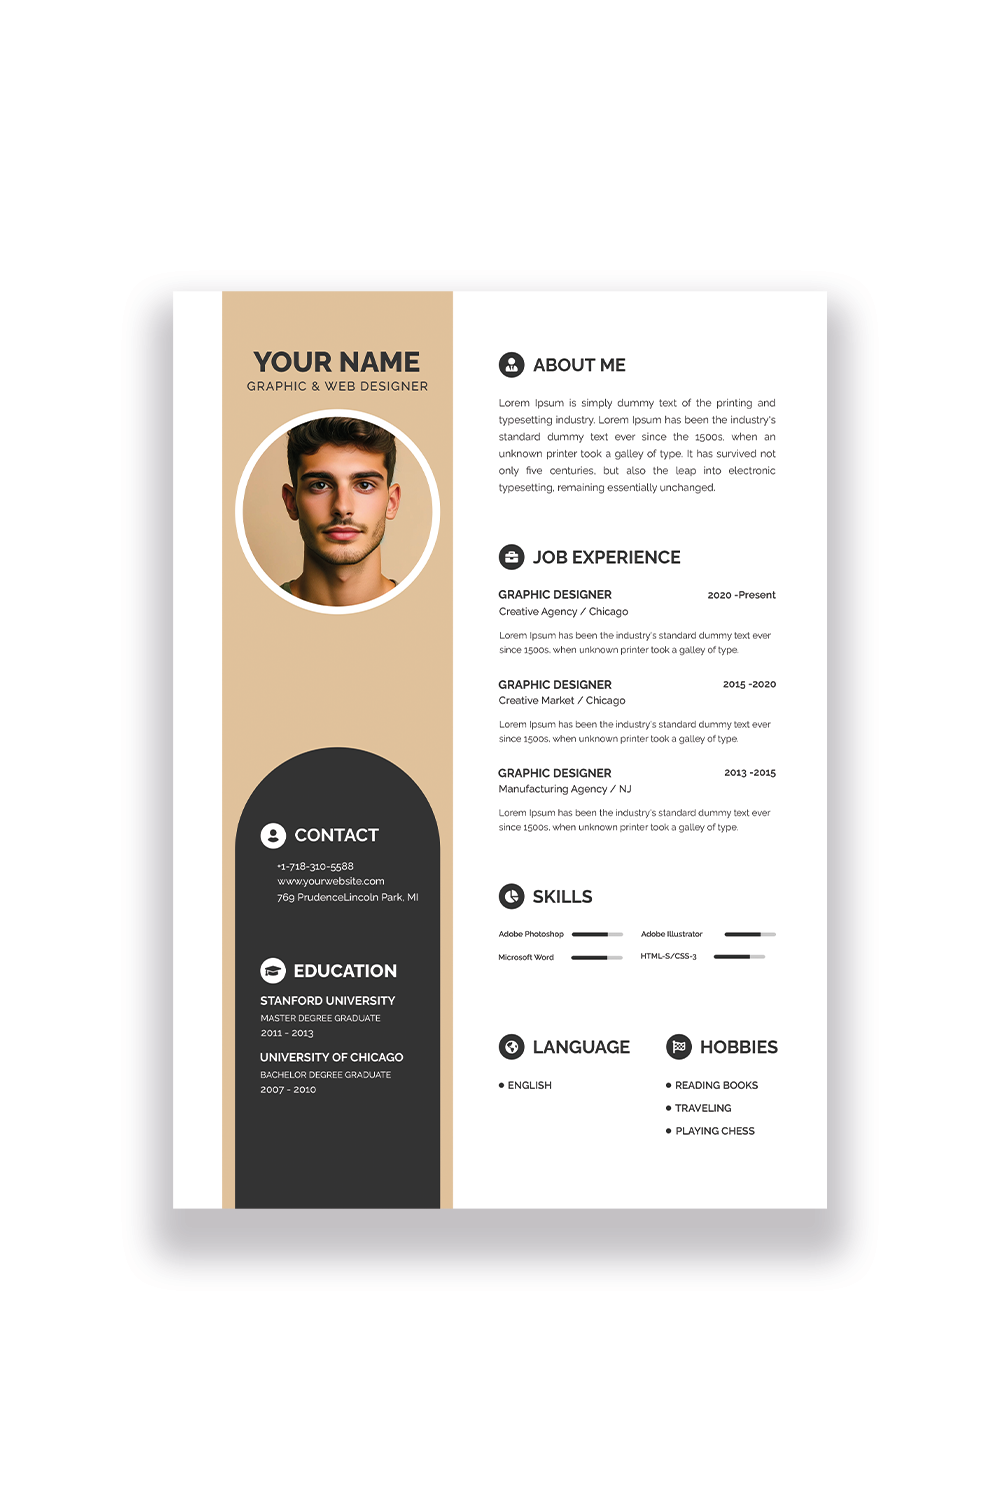 Creative Graphic Designer Resume/CV pinterest preview image.